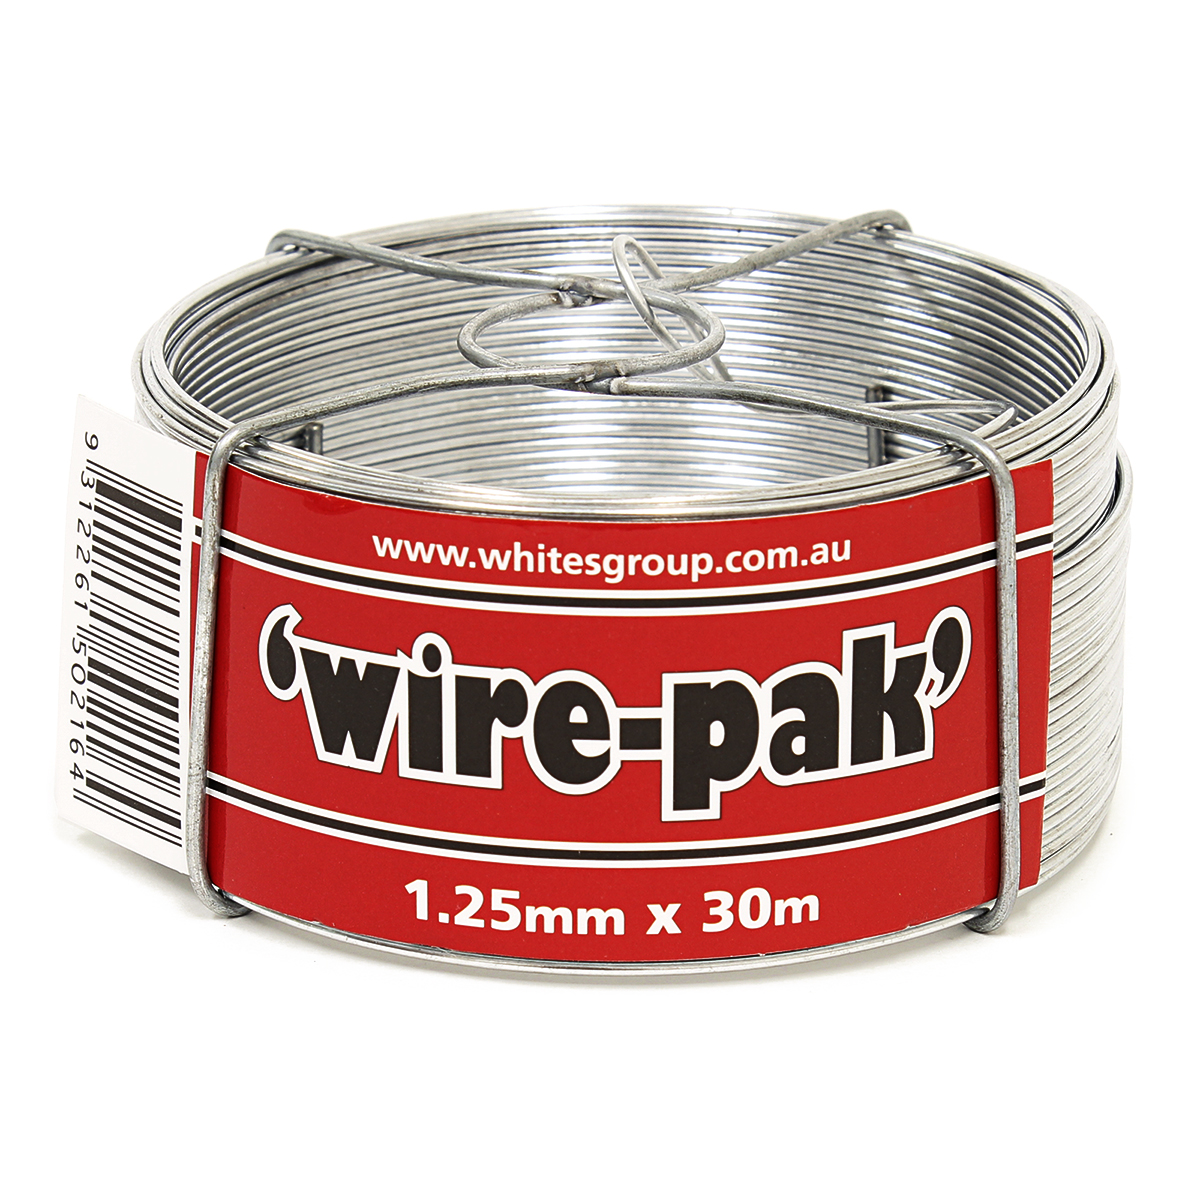 50216 Wirepak red